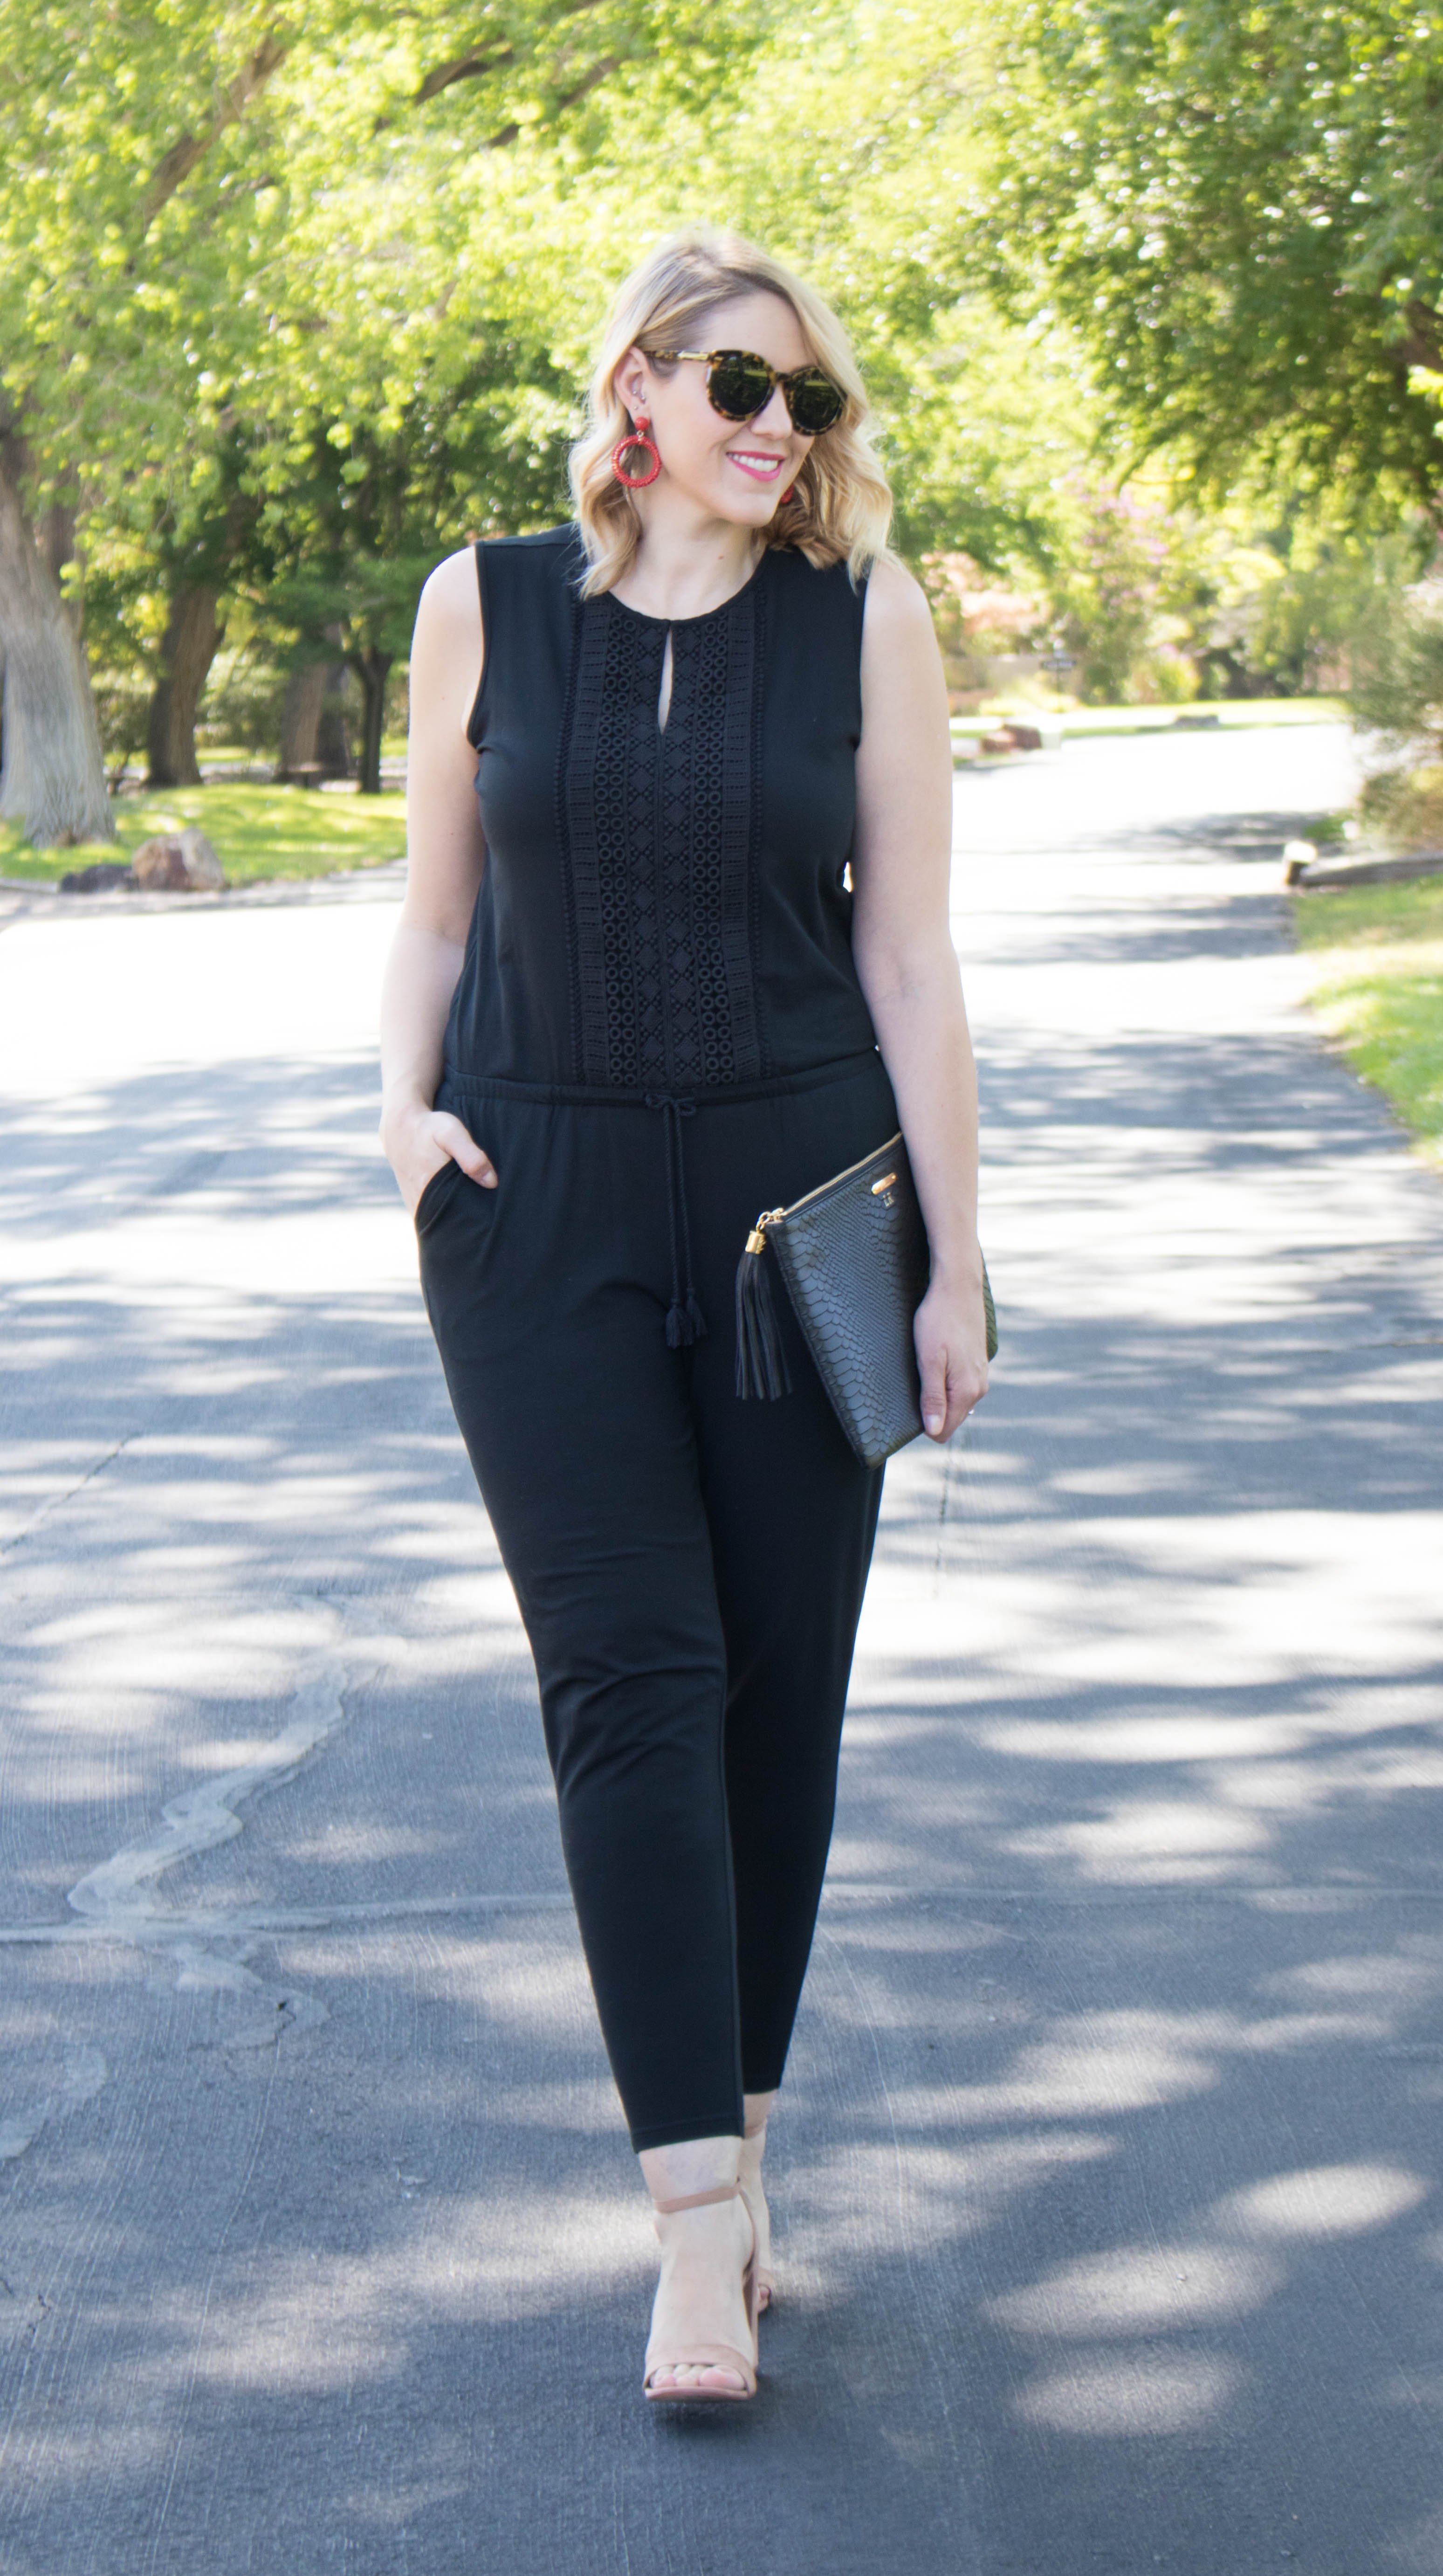 black sleeveless jumpsuit outfit #jumpsuit #fashionblogger #statementearrings